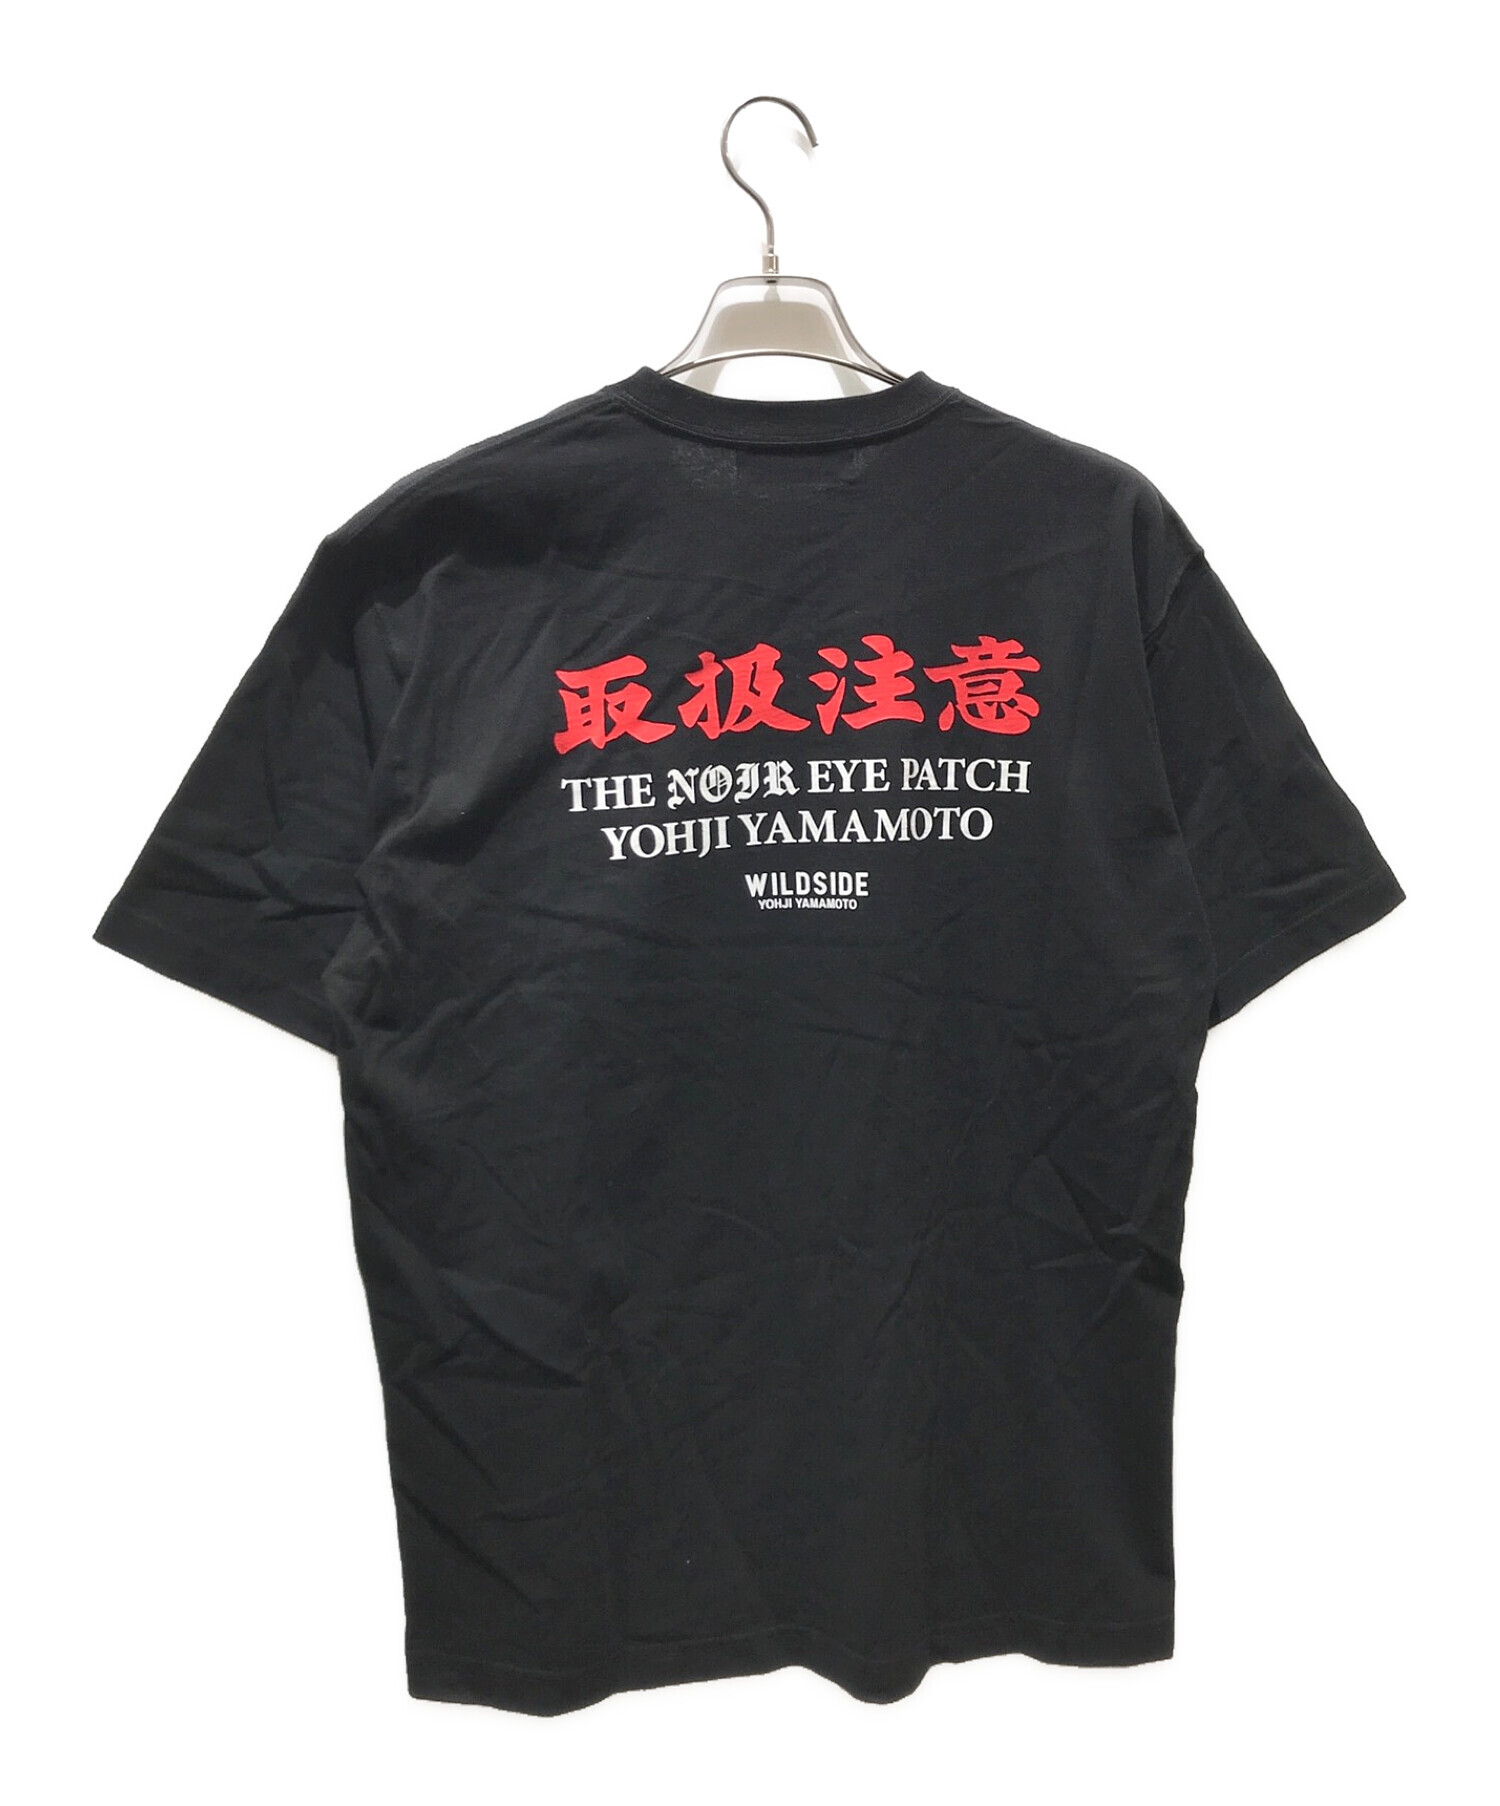 THE BLACK EYE PATCH (ザブラックアイパッチ) WILDSID (ワイルドサイド) Short Sleeve T-shirt　 NOIR EYE PATCH Yohji Yamamoto ブラック サイズ:L